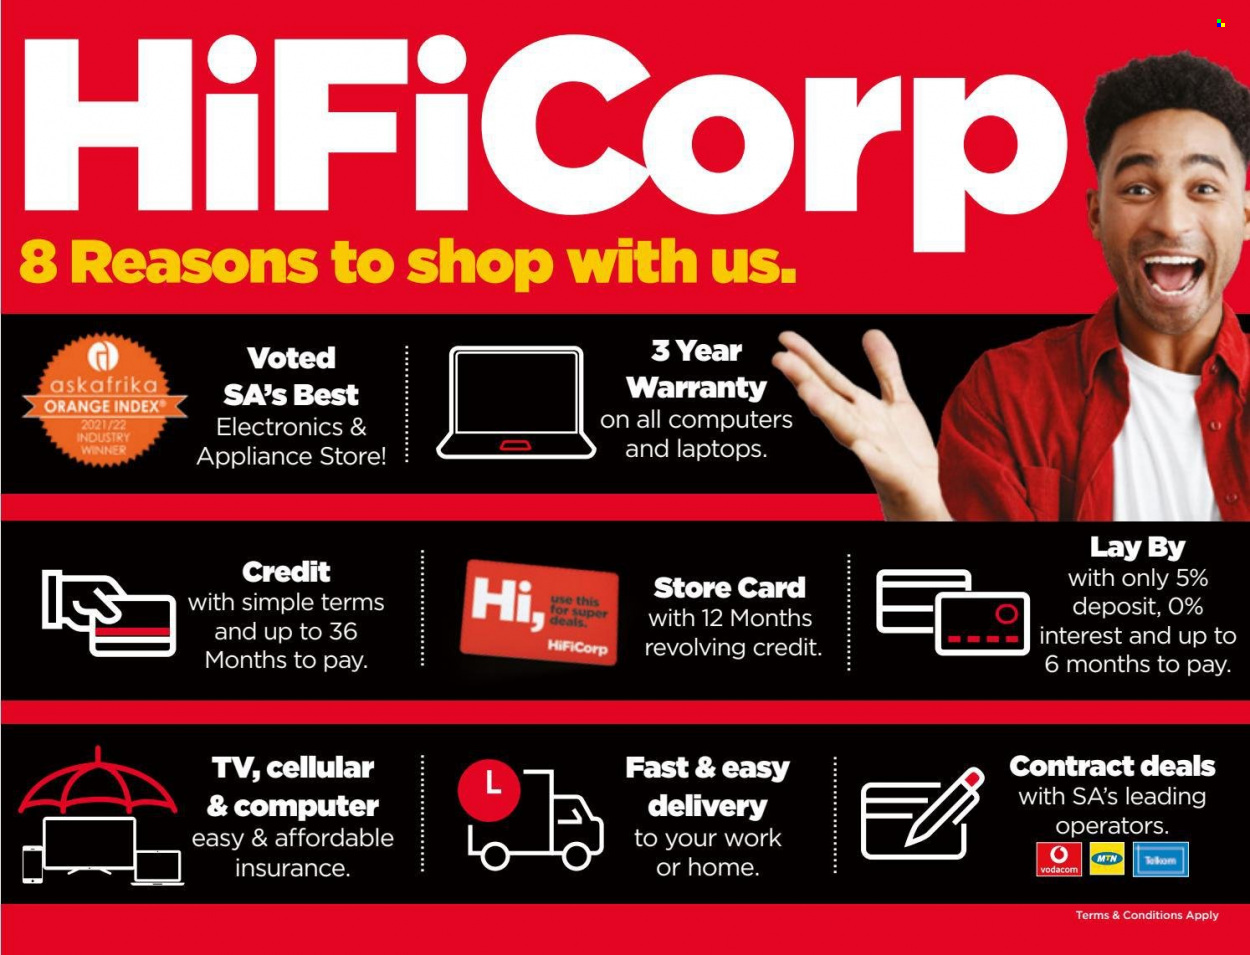 HiFi Corp specials. 